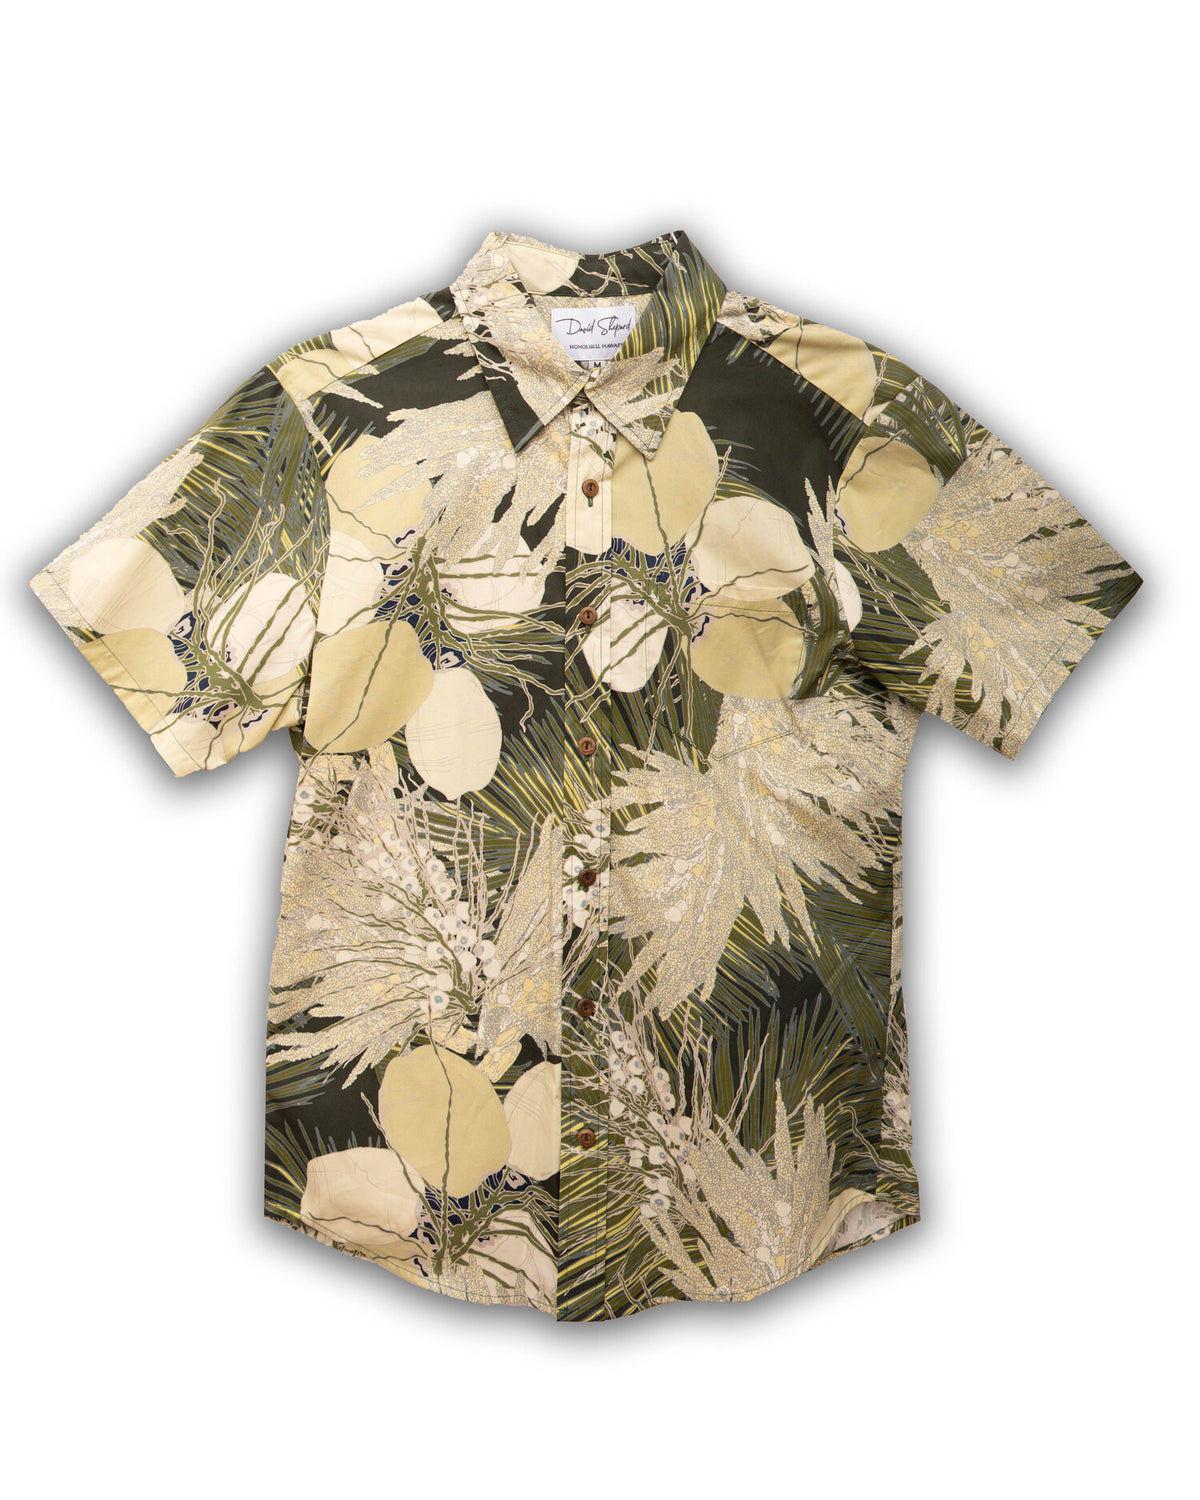 Pop-Up Mākeke - David Shepard Hawaii - Coconut Flower, Fruit, &amp; Fronds Aloha Shirt - Front View